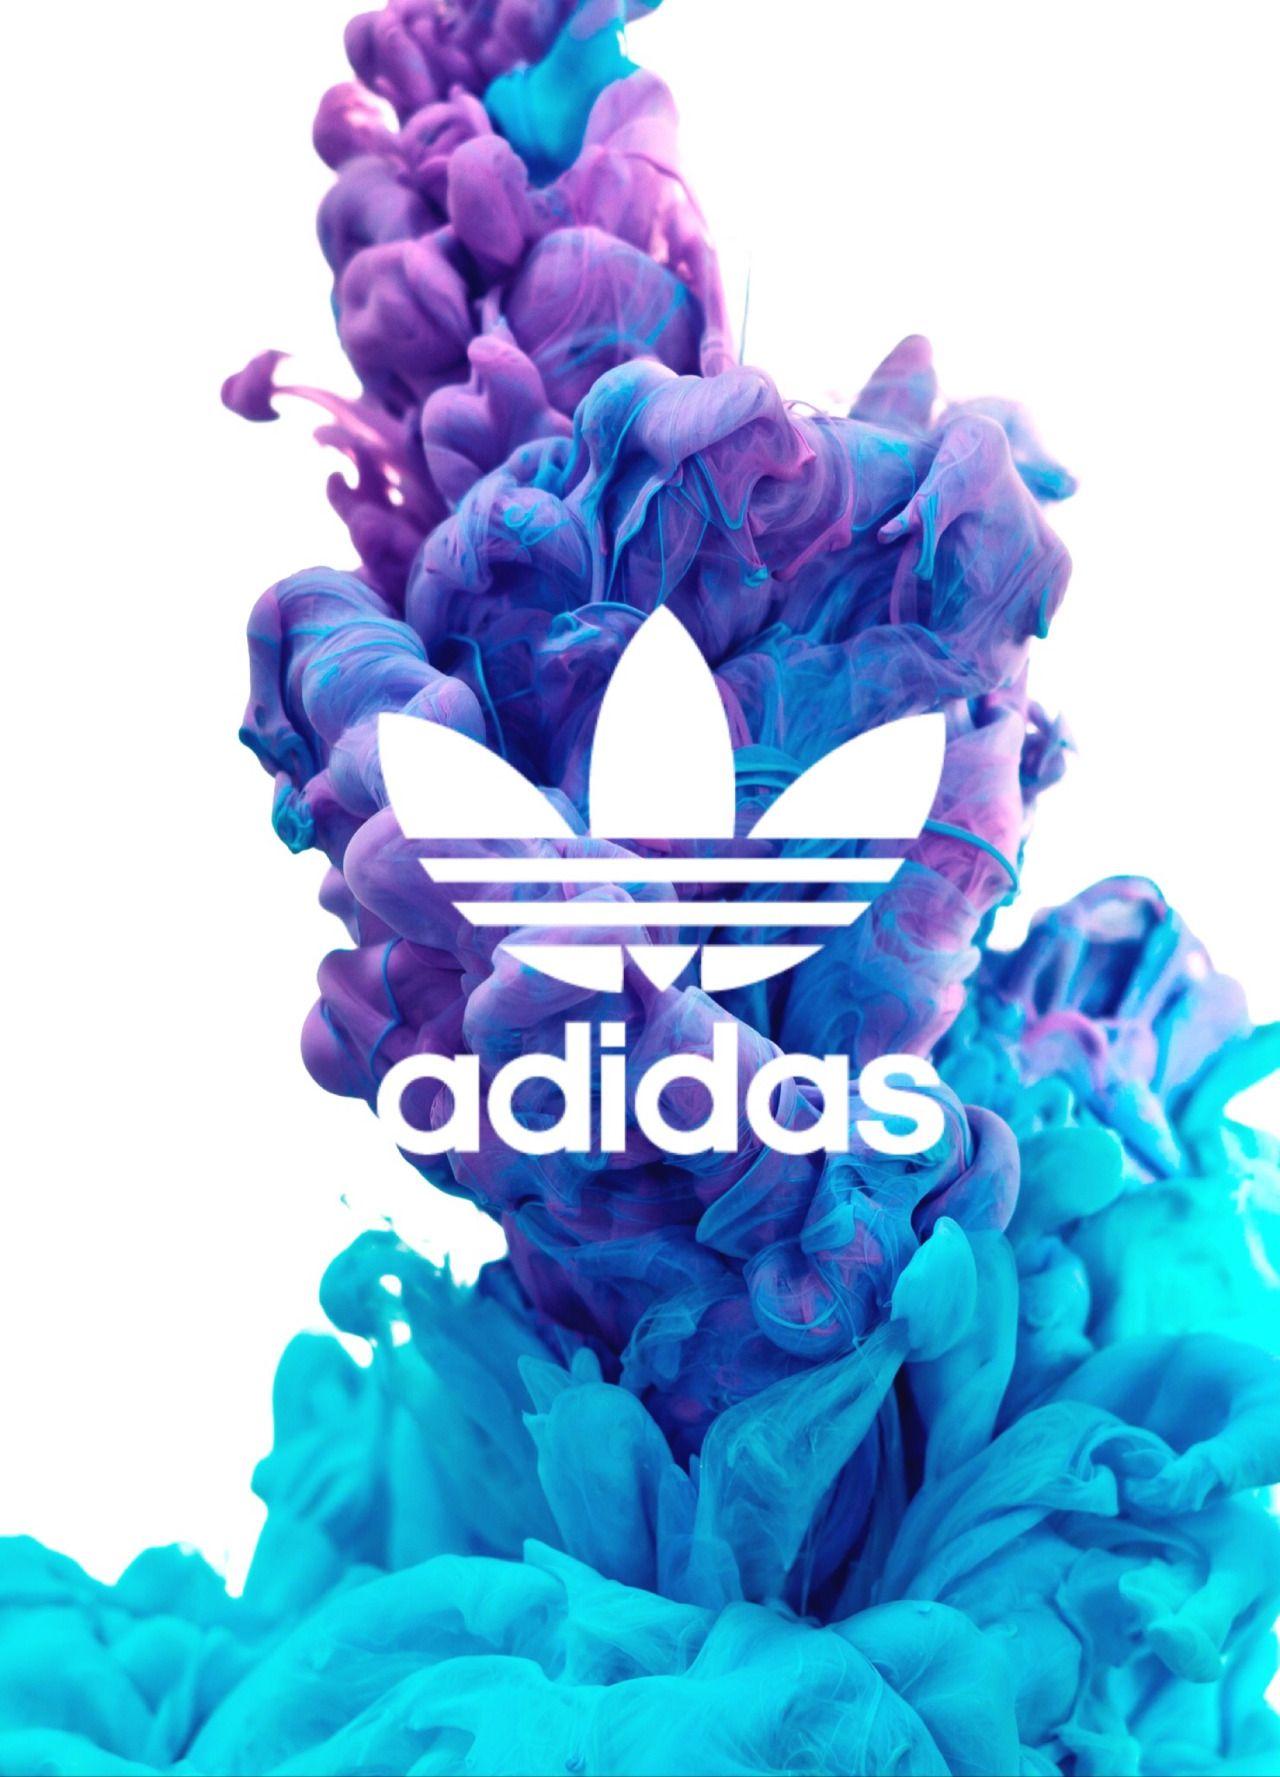 Adidas Wallpaper, Photo. Adidas. Follow me, I love